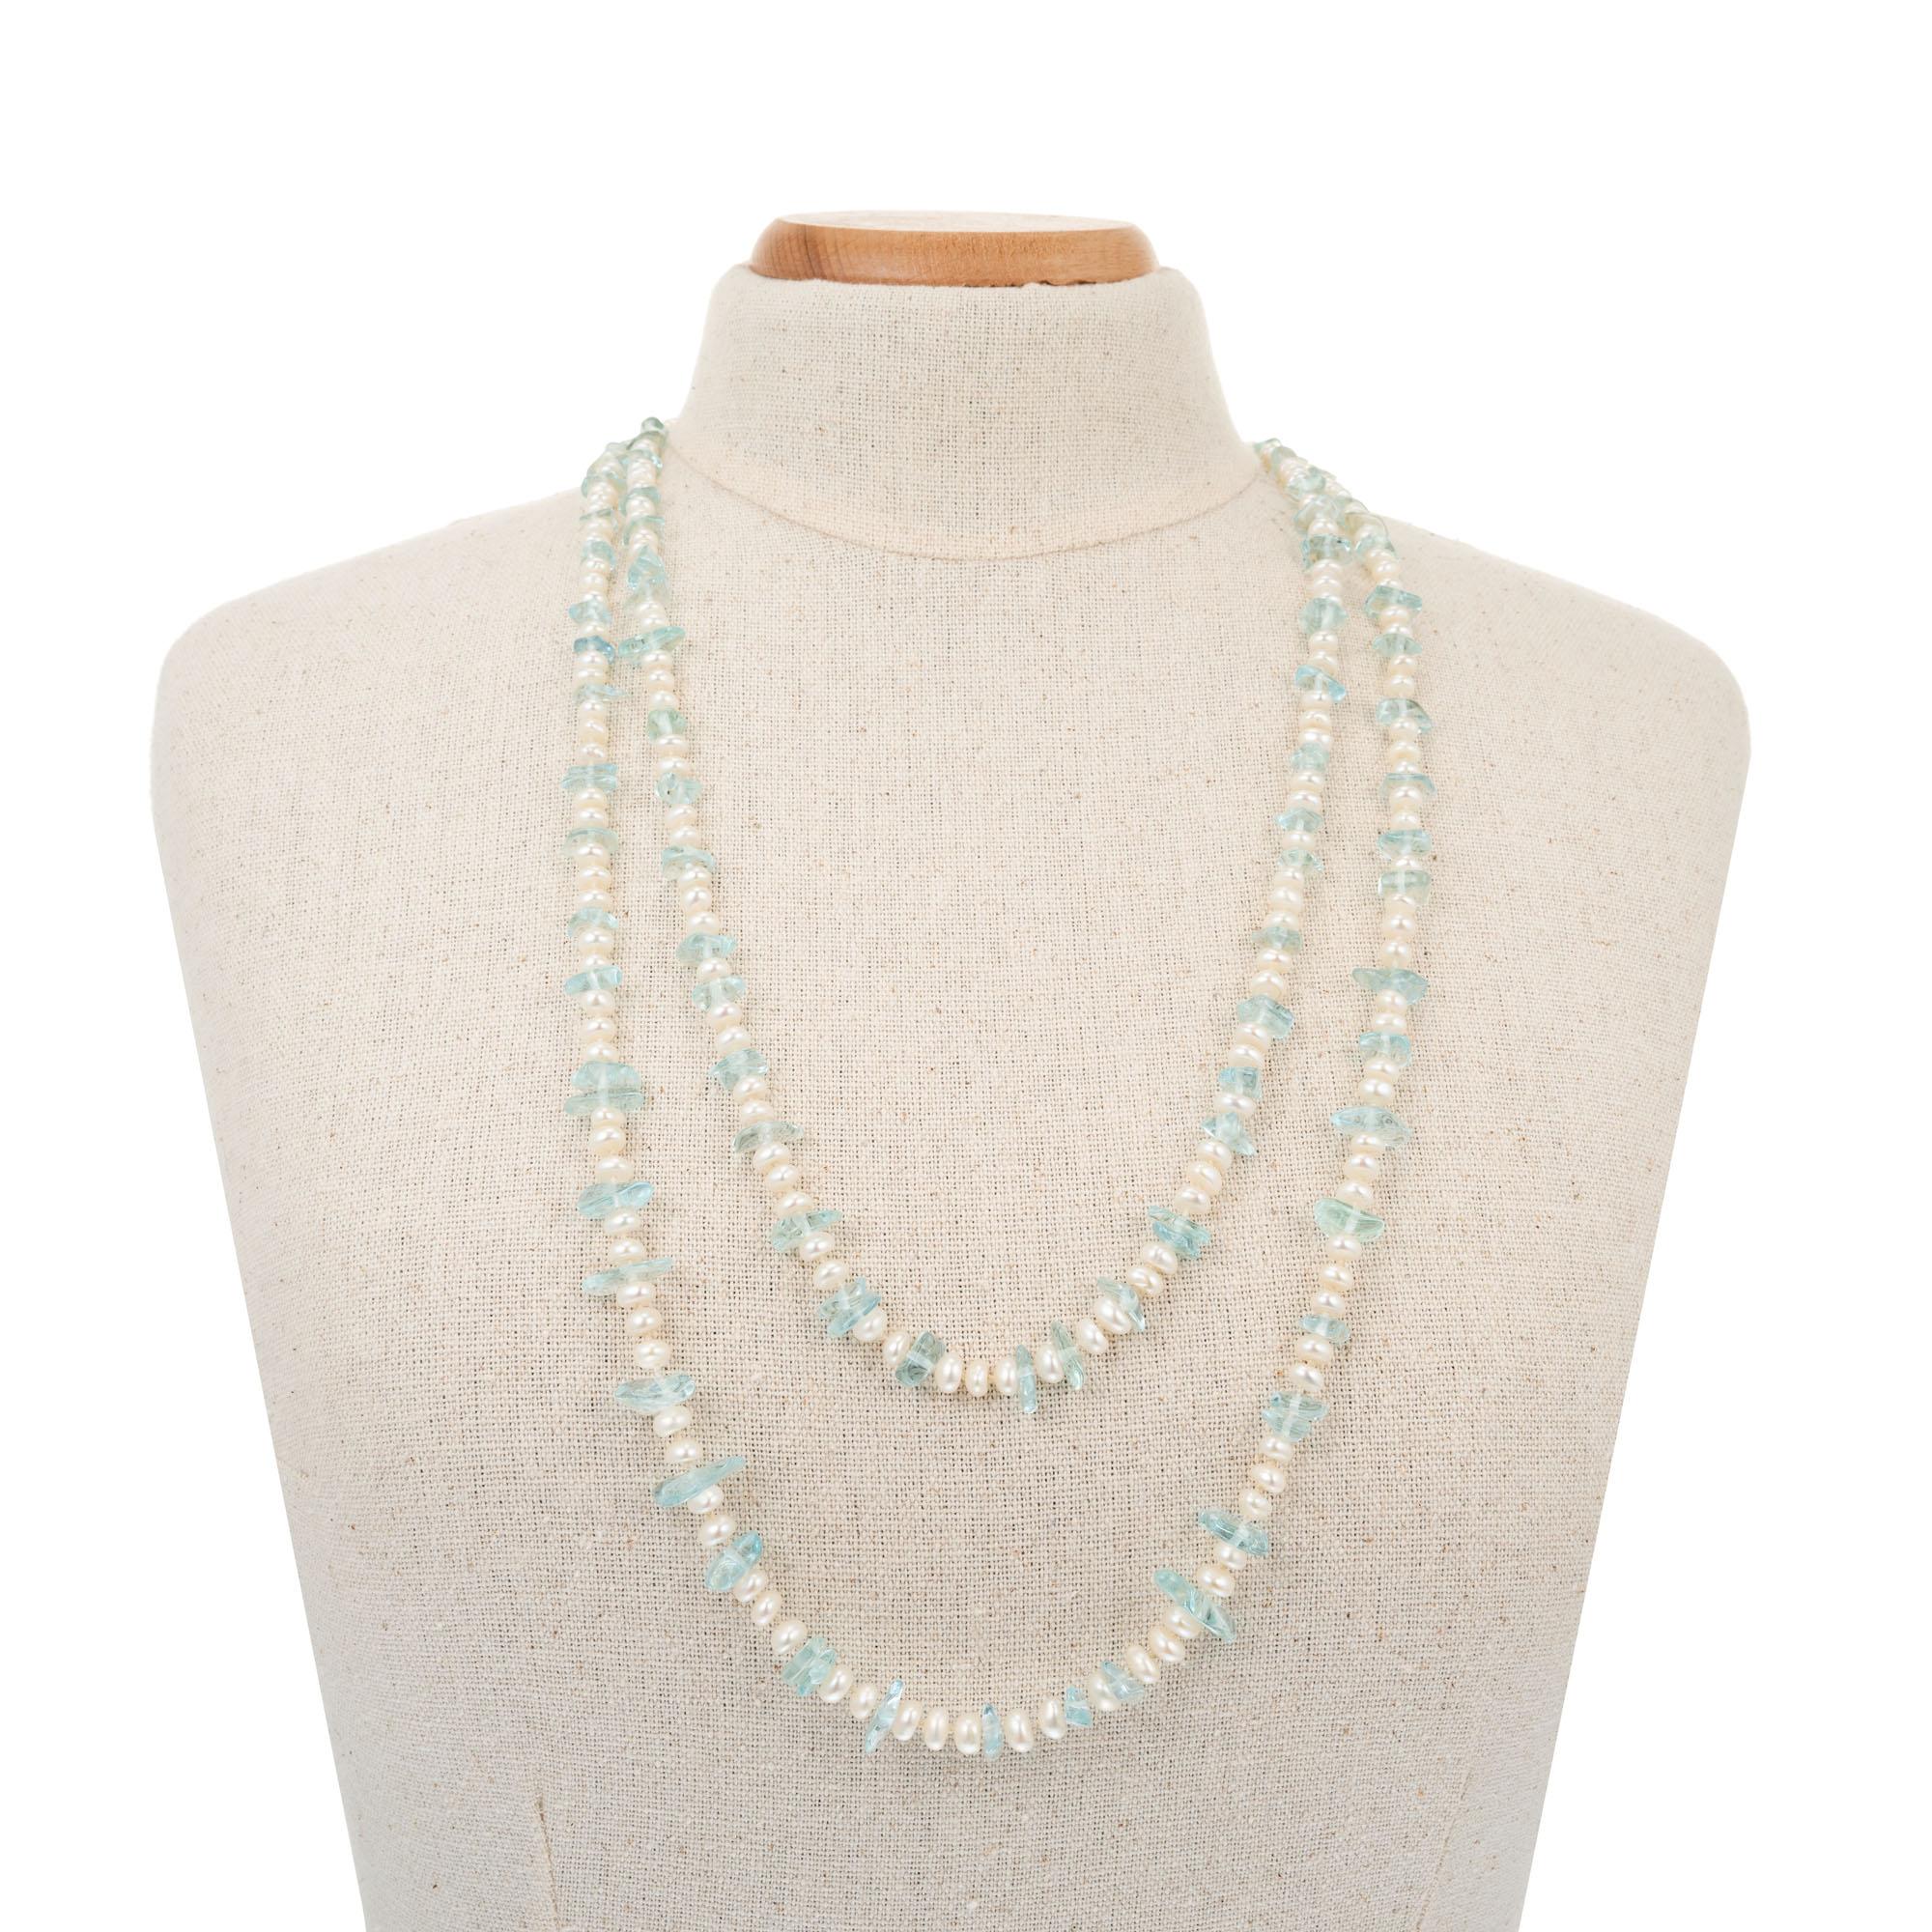 gumps pearl necklace